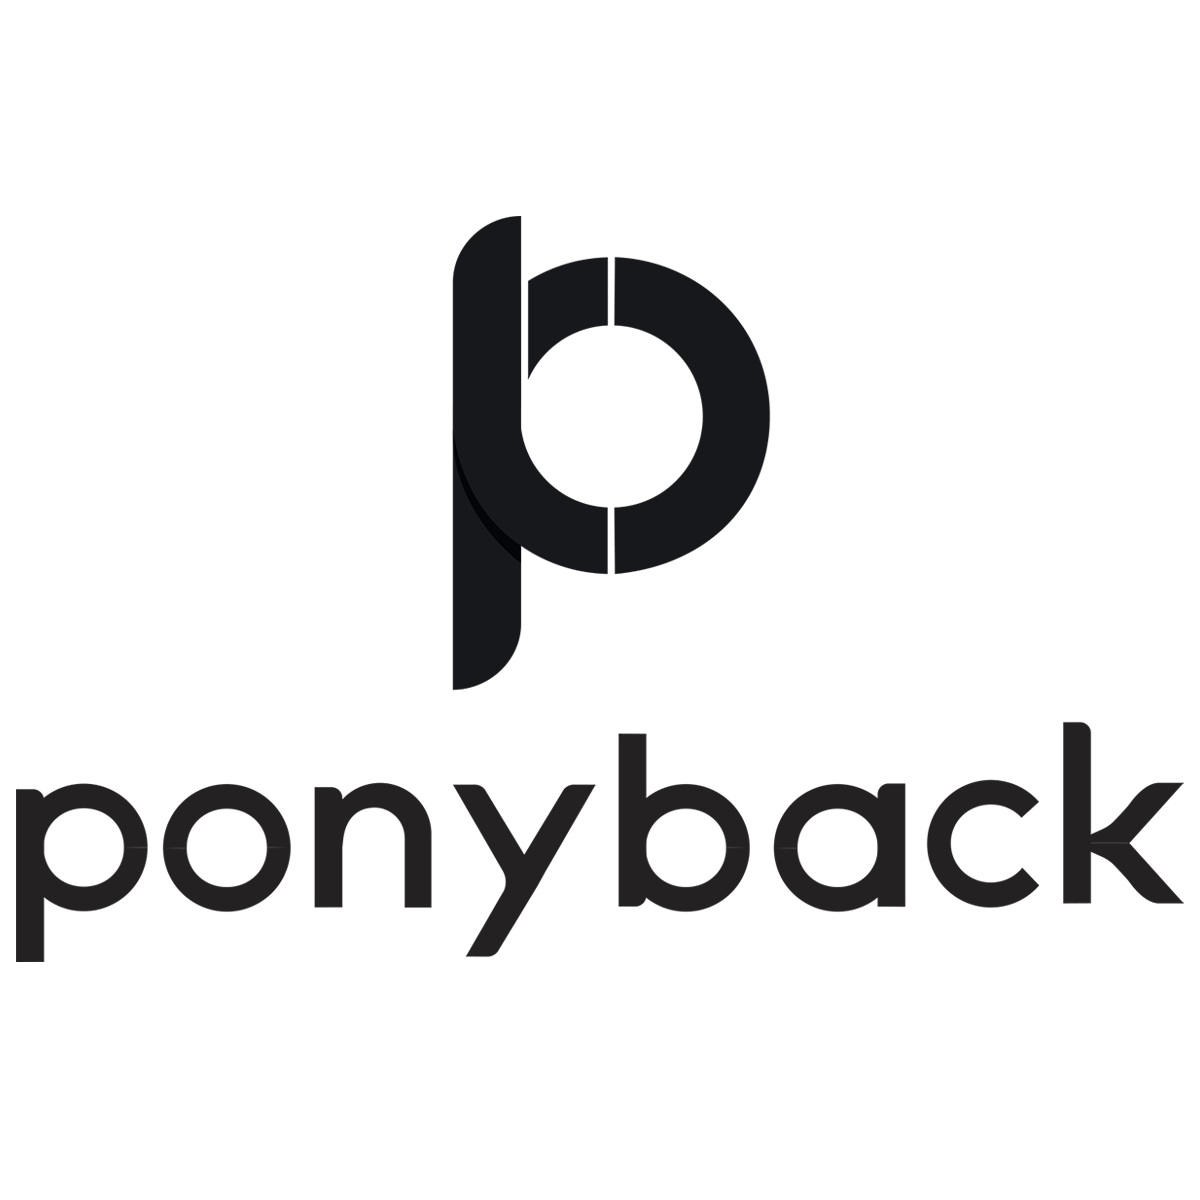 Ponyback Support logo